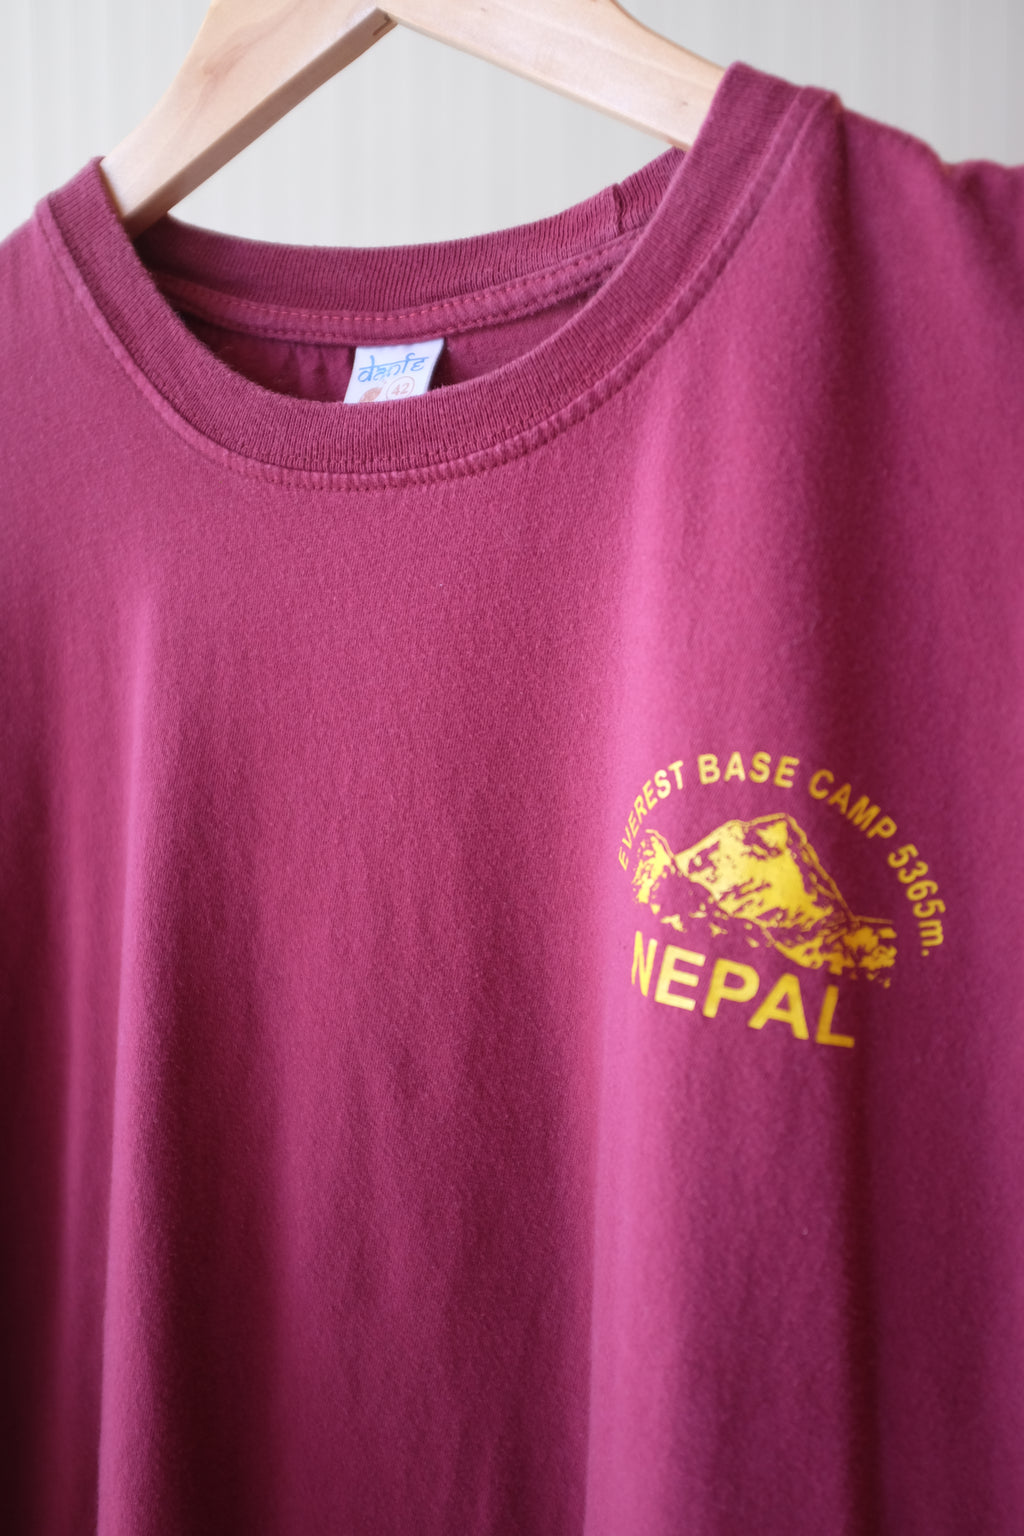 Nepal Everest Base Camp - Vintage Tee